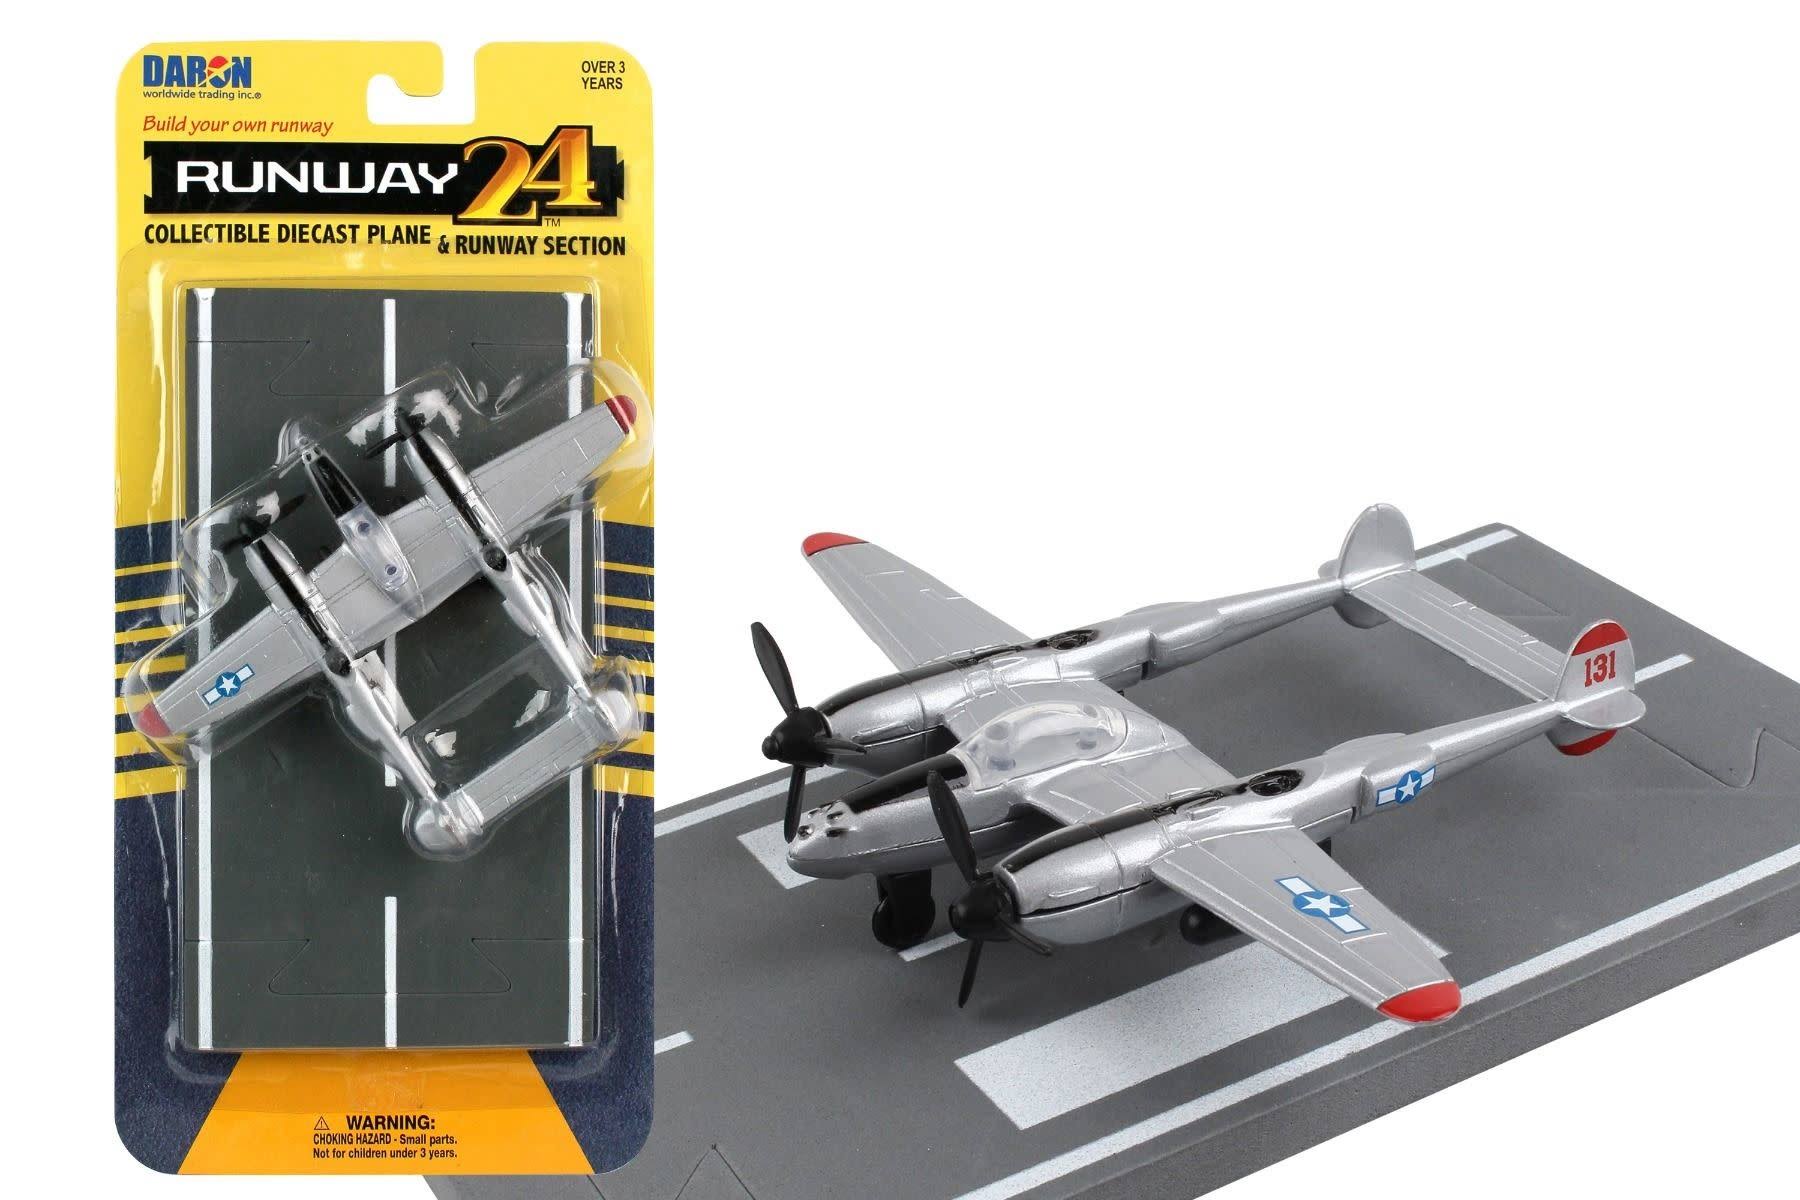 Daron Runway24 Diecast Metal Toy with Runway Section F-22 Raptor 